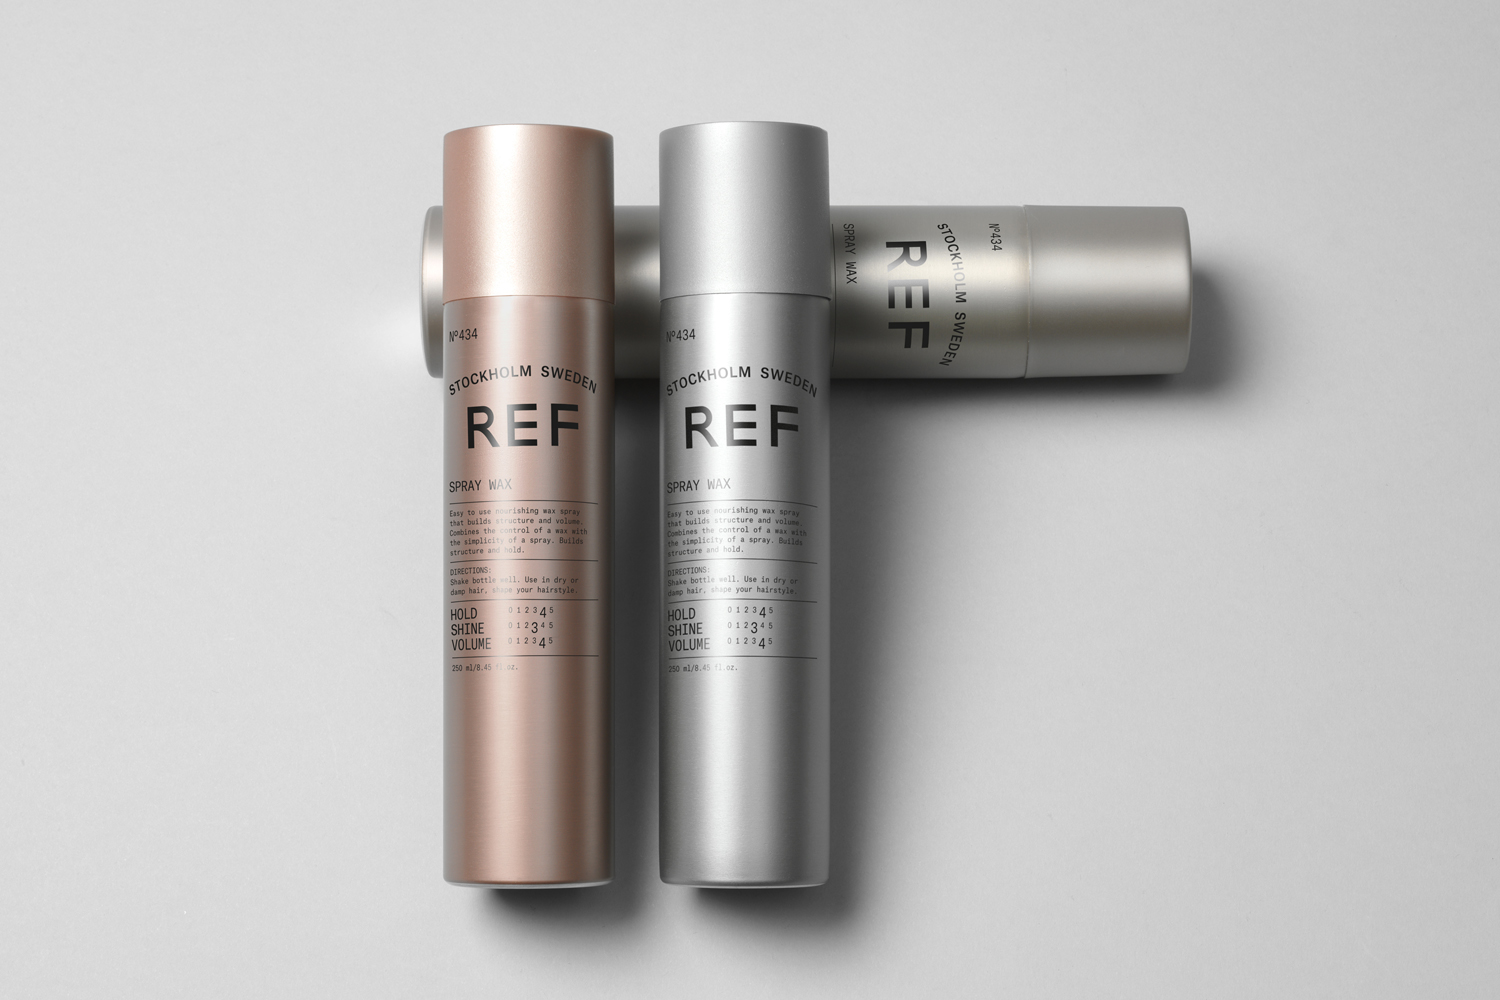 Packaging design by Scandinavian studio Kurppa Hosk for Swedish hair care brand REF